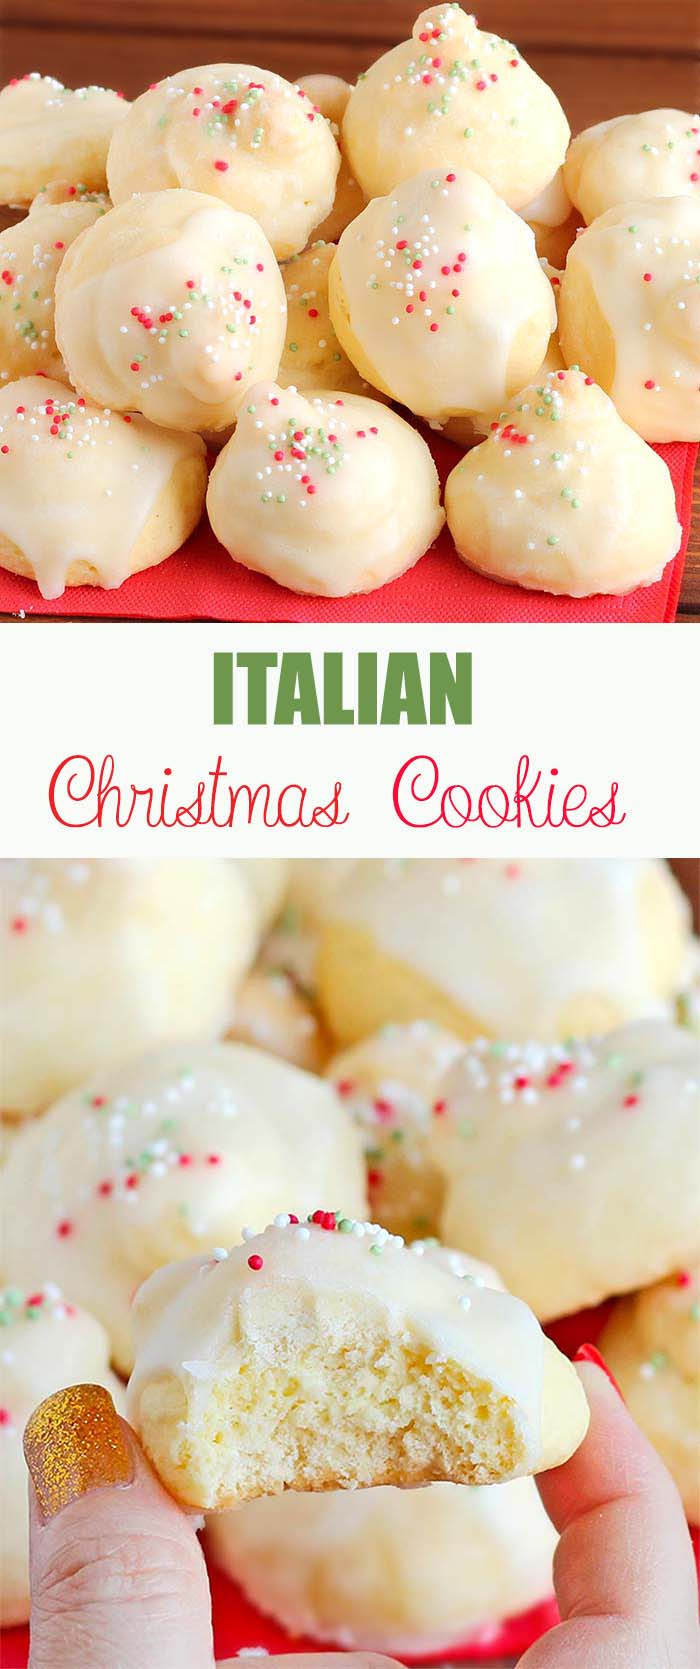 Recipes For Italian Christmas Cookies
 Italian Christmas Cookies Cakescottage